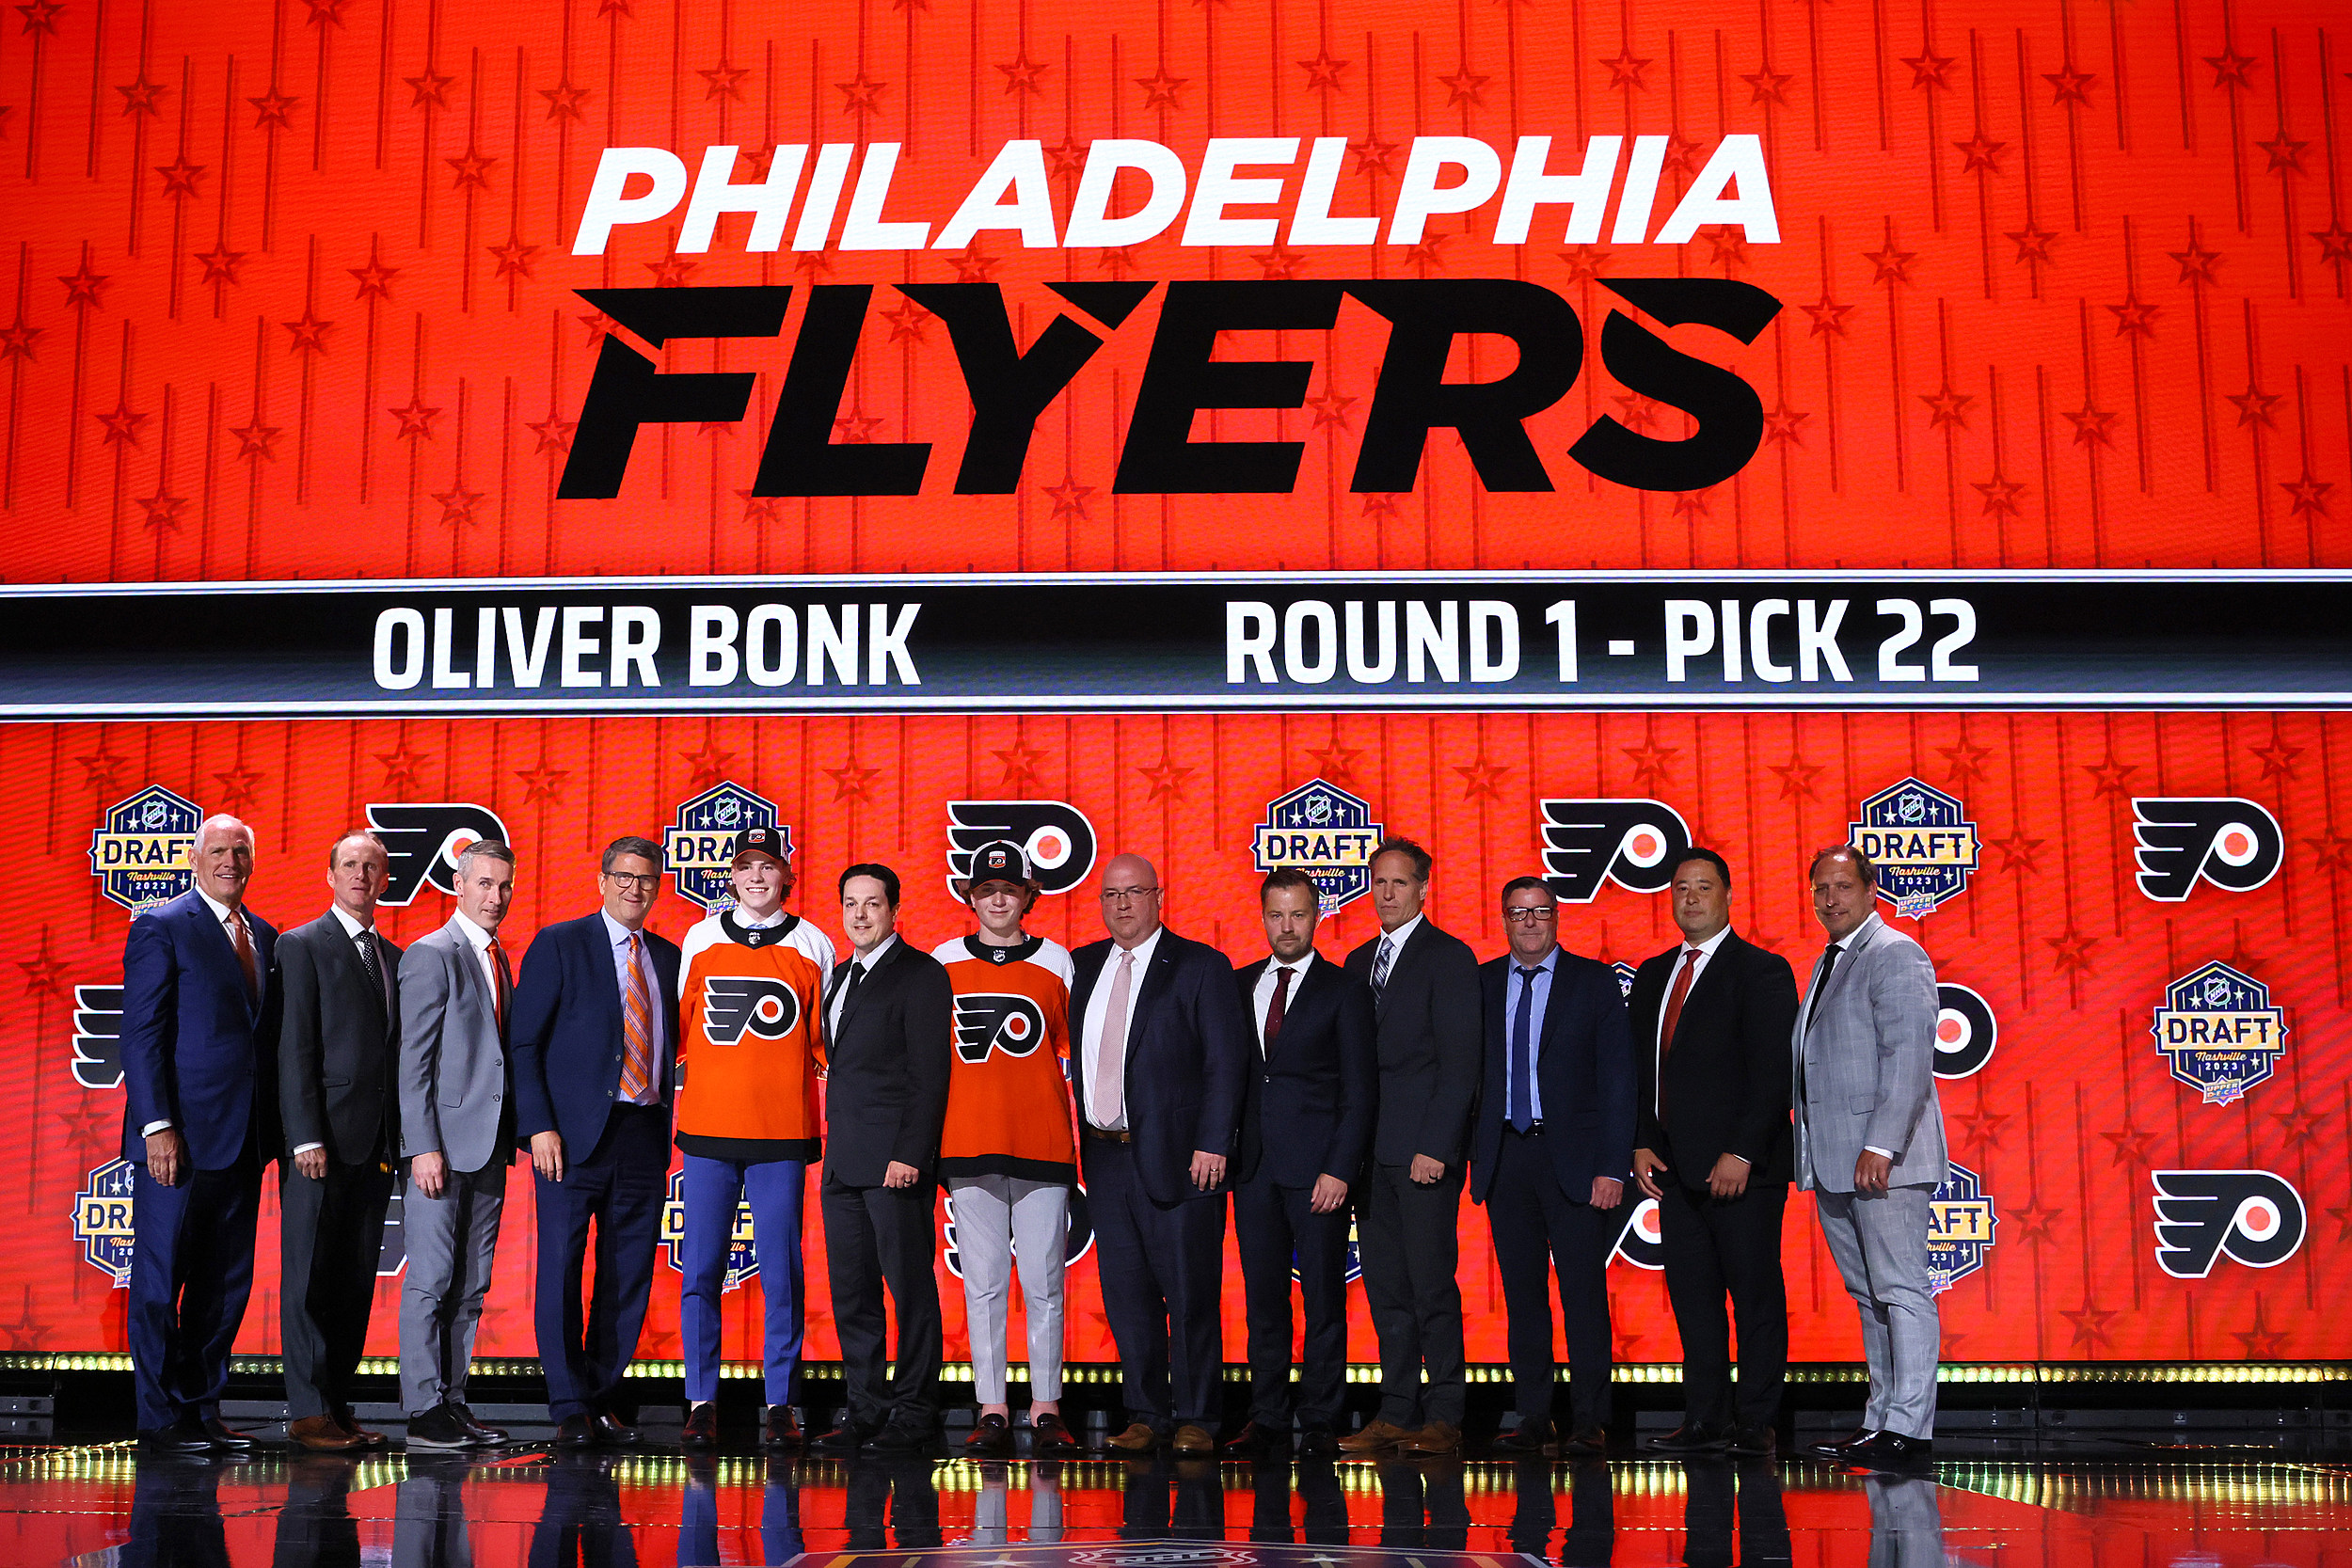 Philadelphia Flyers rookie star will change jersey number